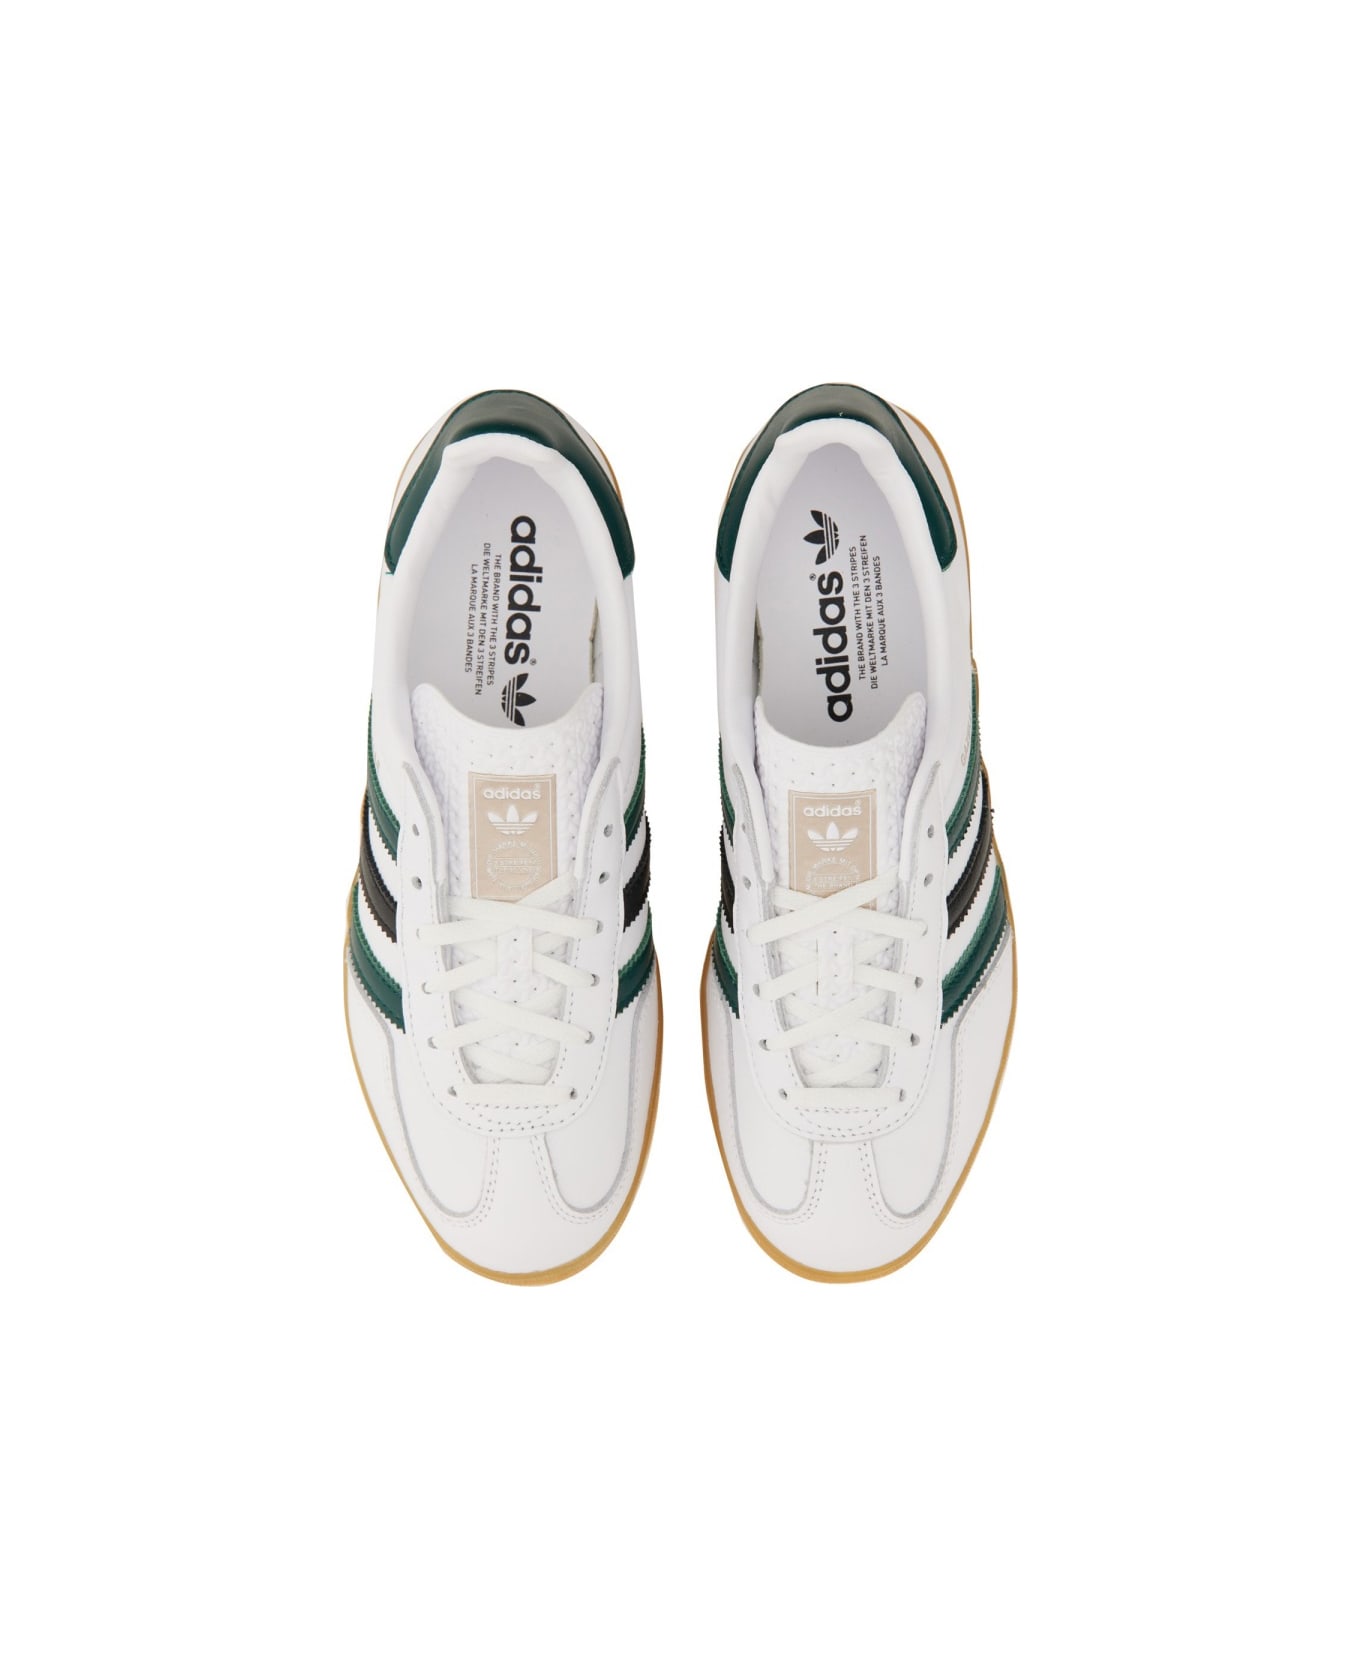 Adidas Originals Gazelle Indoor Shoe - Ftwwht/cgreen/cblack スニーカー